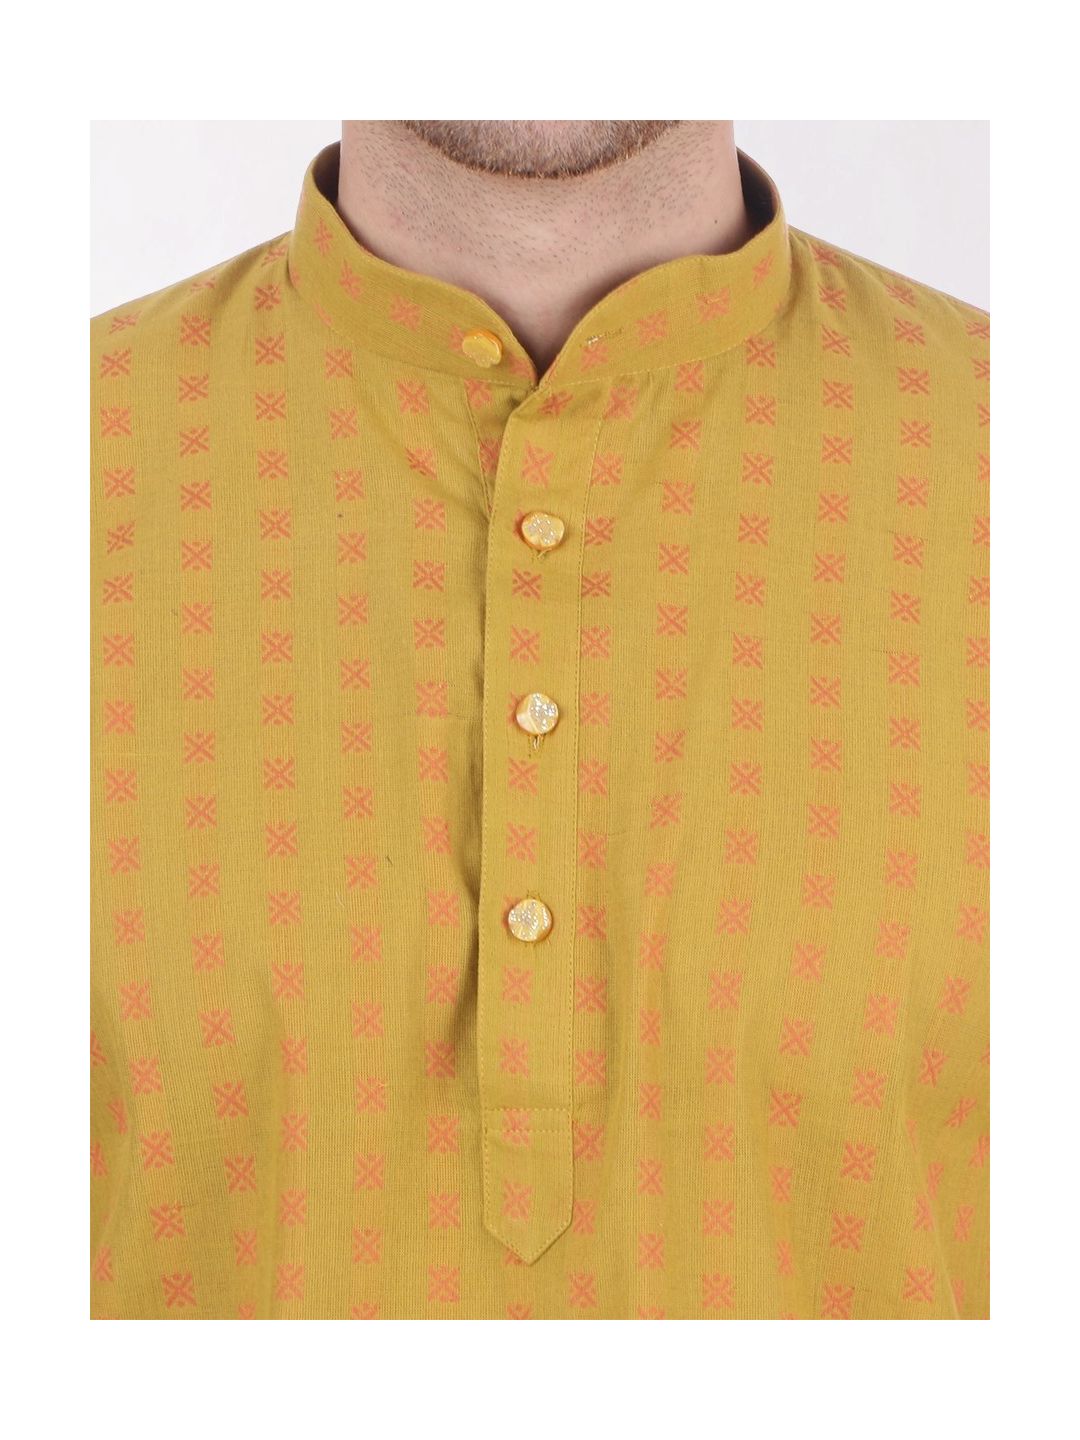 Gold Yellow Woven Design Handloom Cotton Kurta